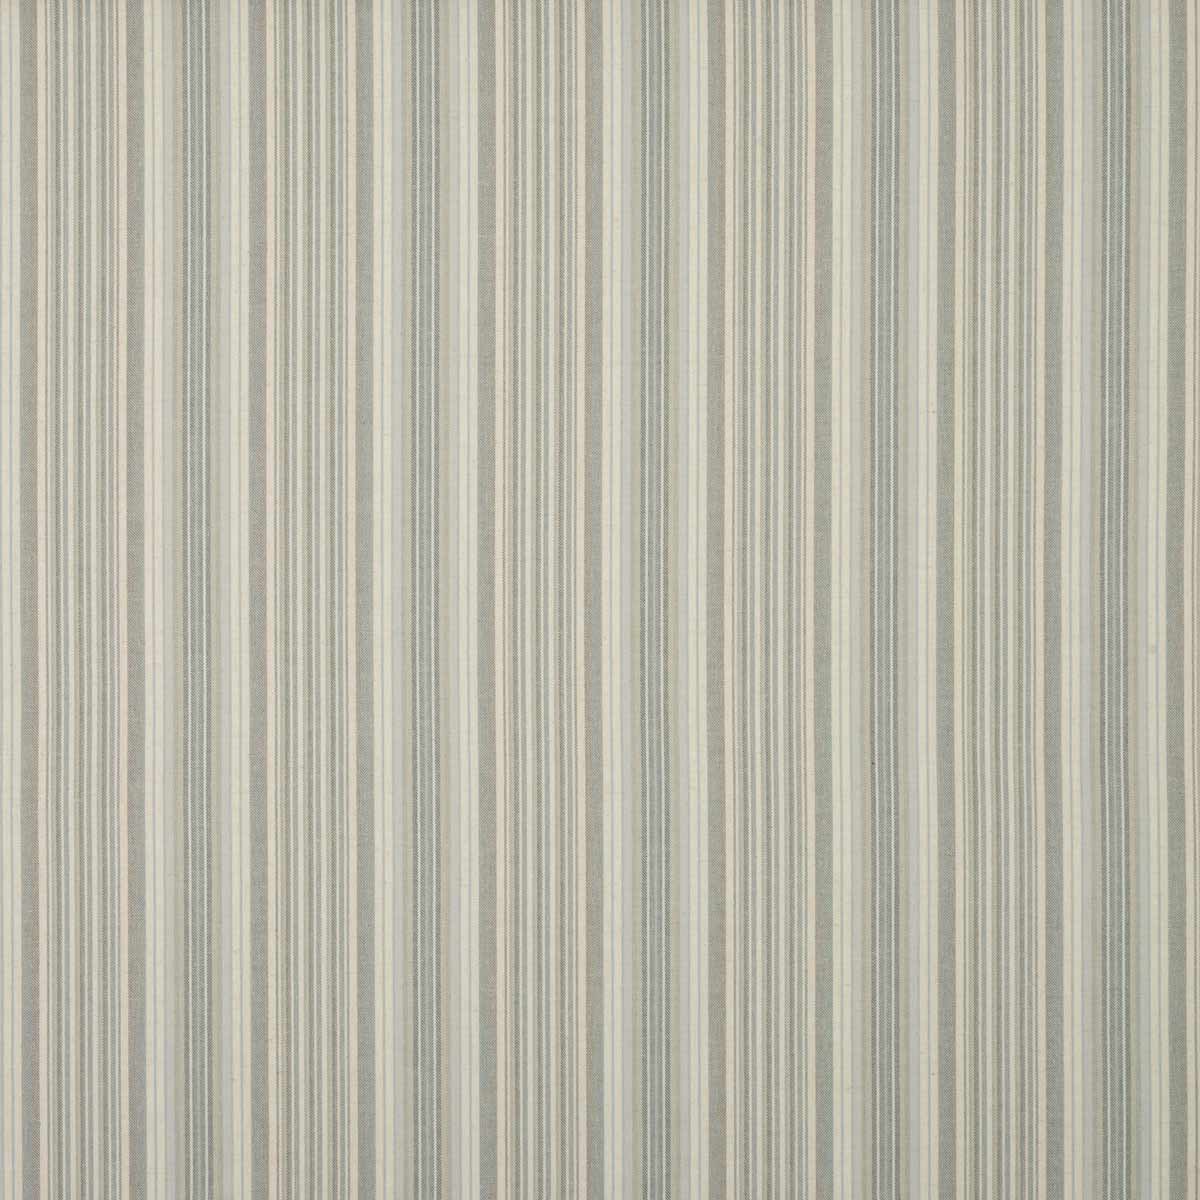 Kalahari Stripe Fabric Charcoal